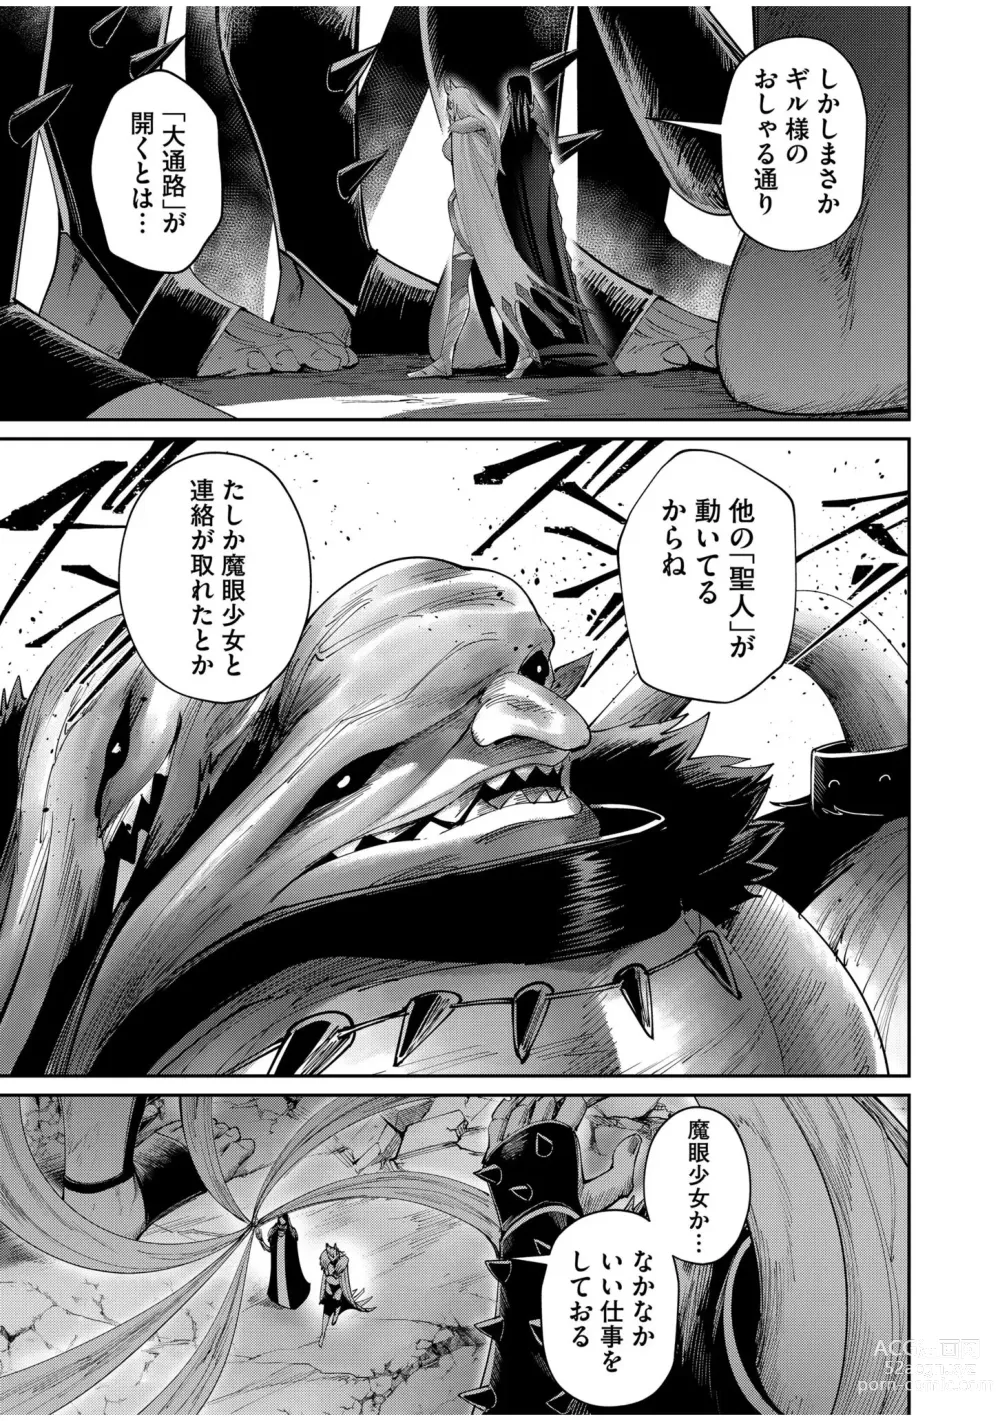 Page 159 of manga Kichiku Eiyuu Vol.07